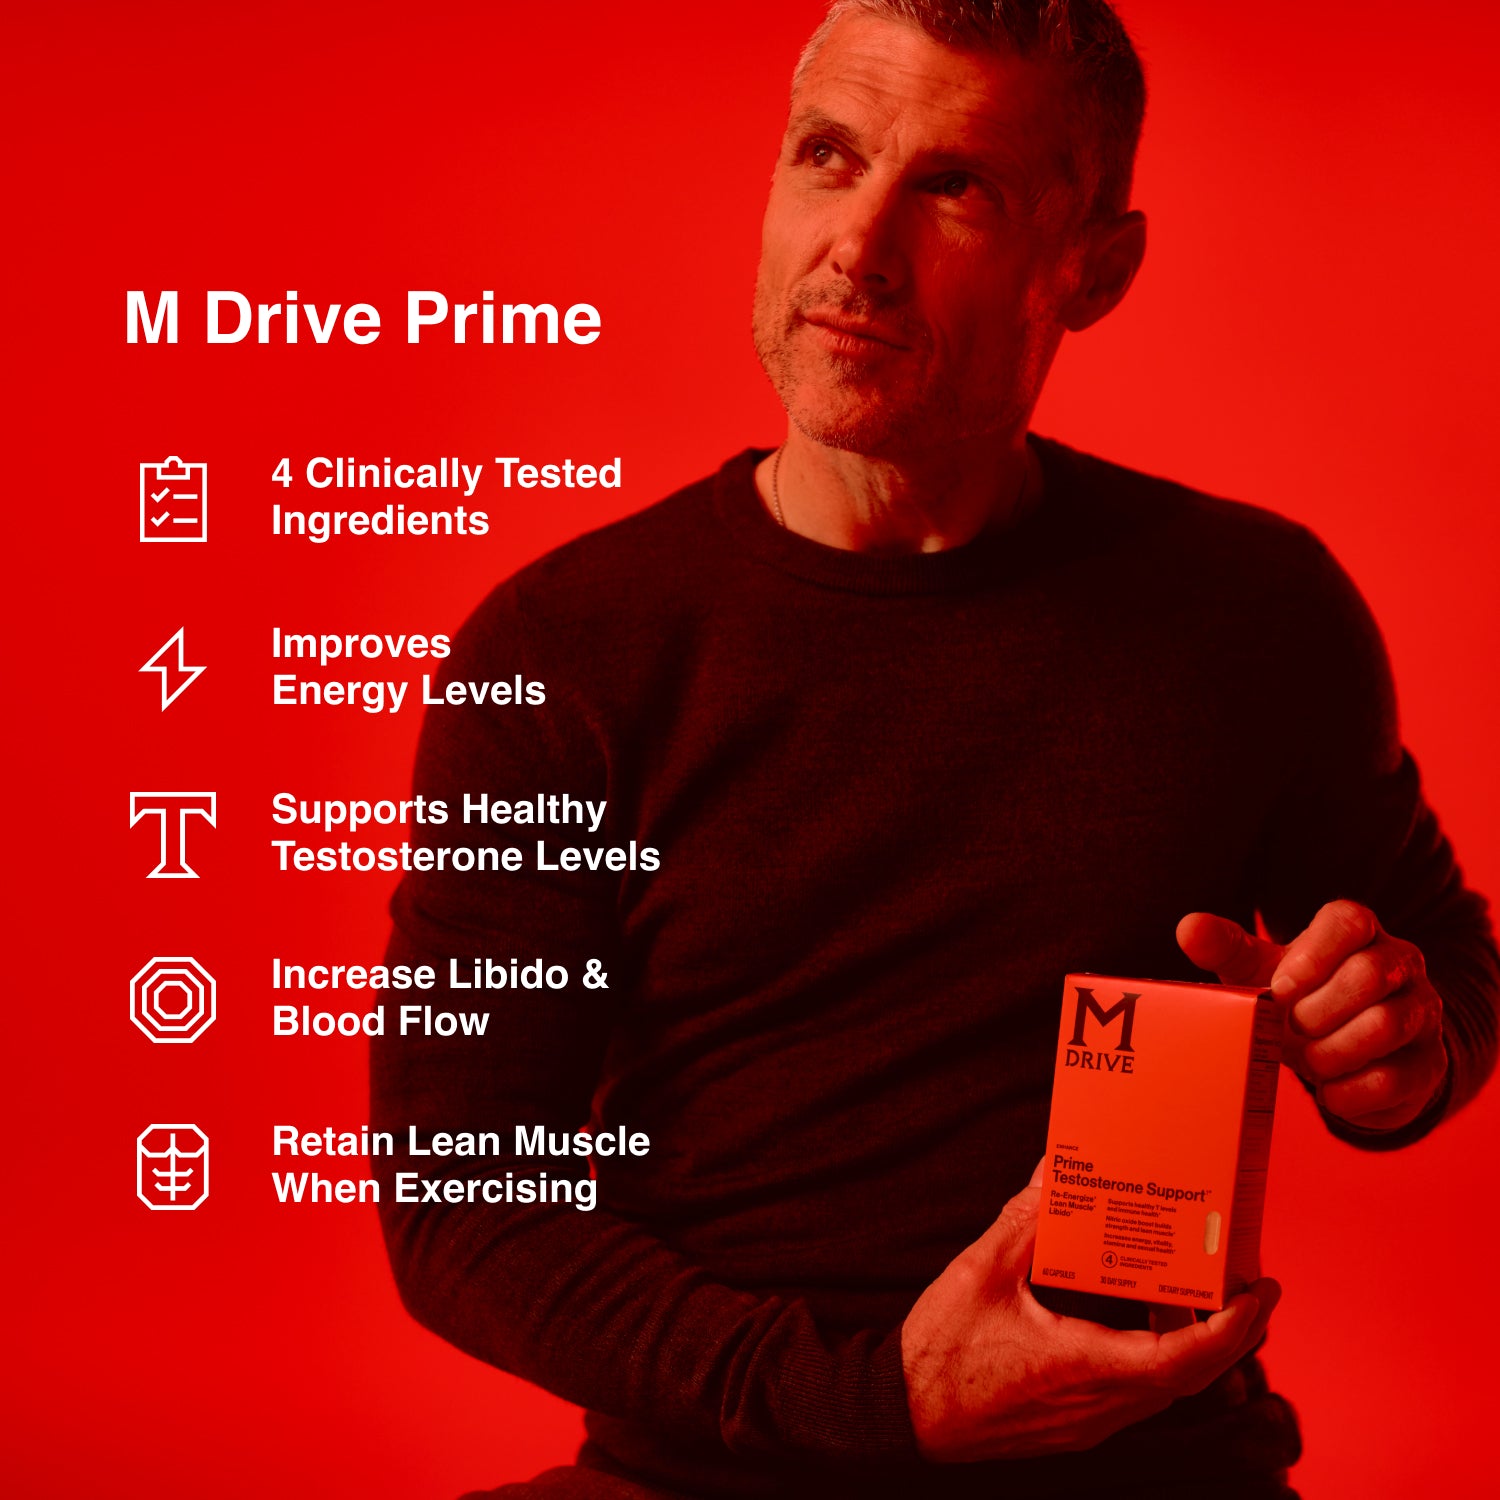 M Drive Prime Benefits